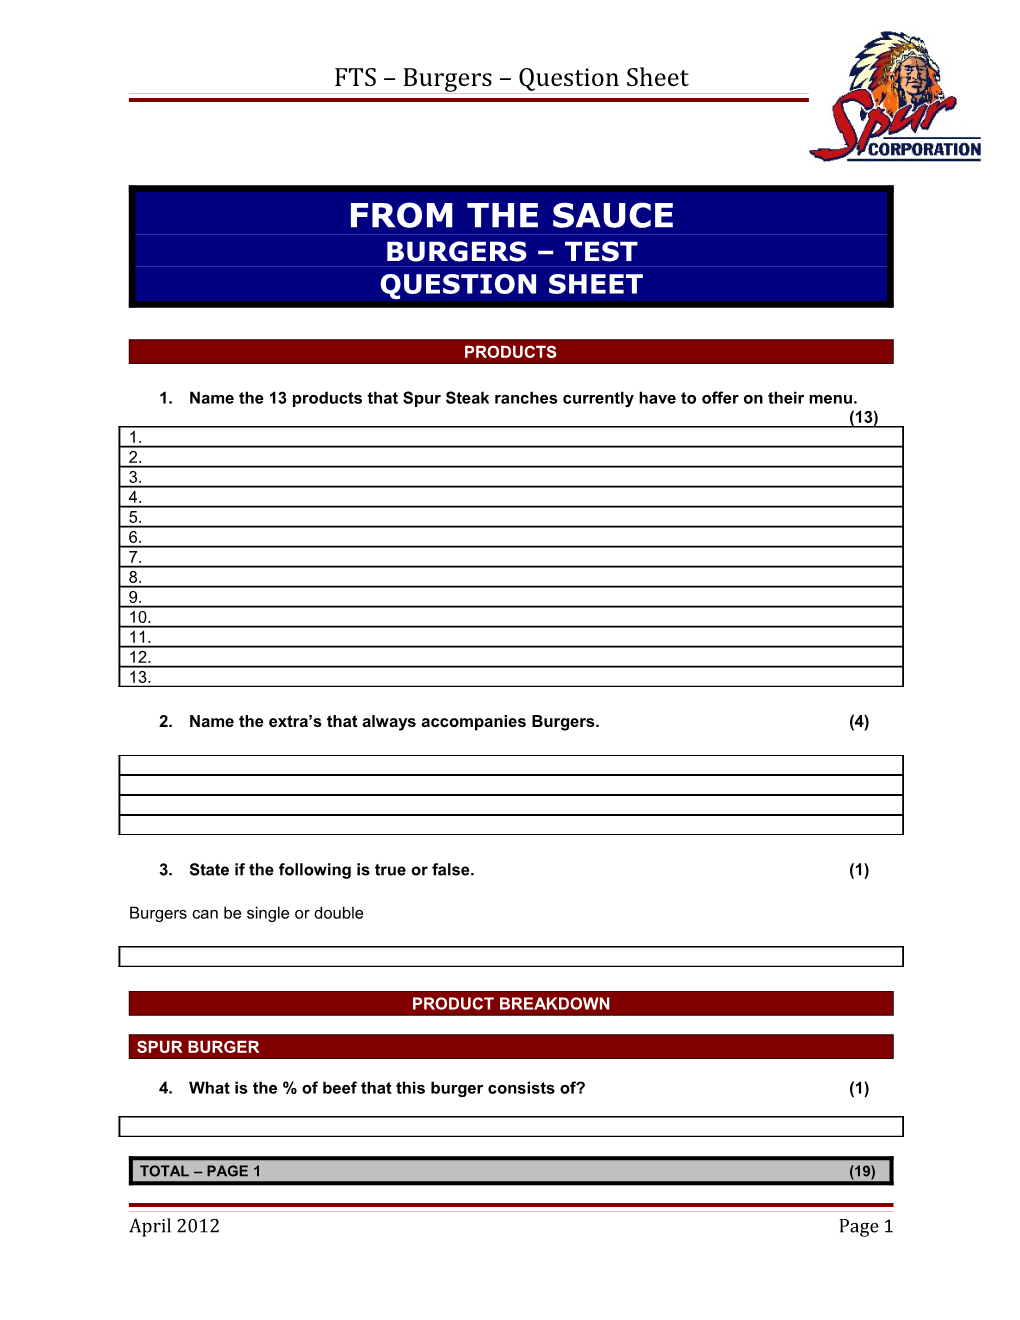 FTS Burgers Question Sheet